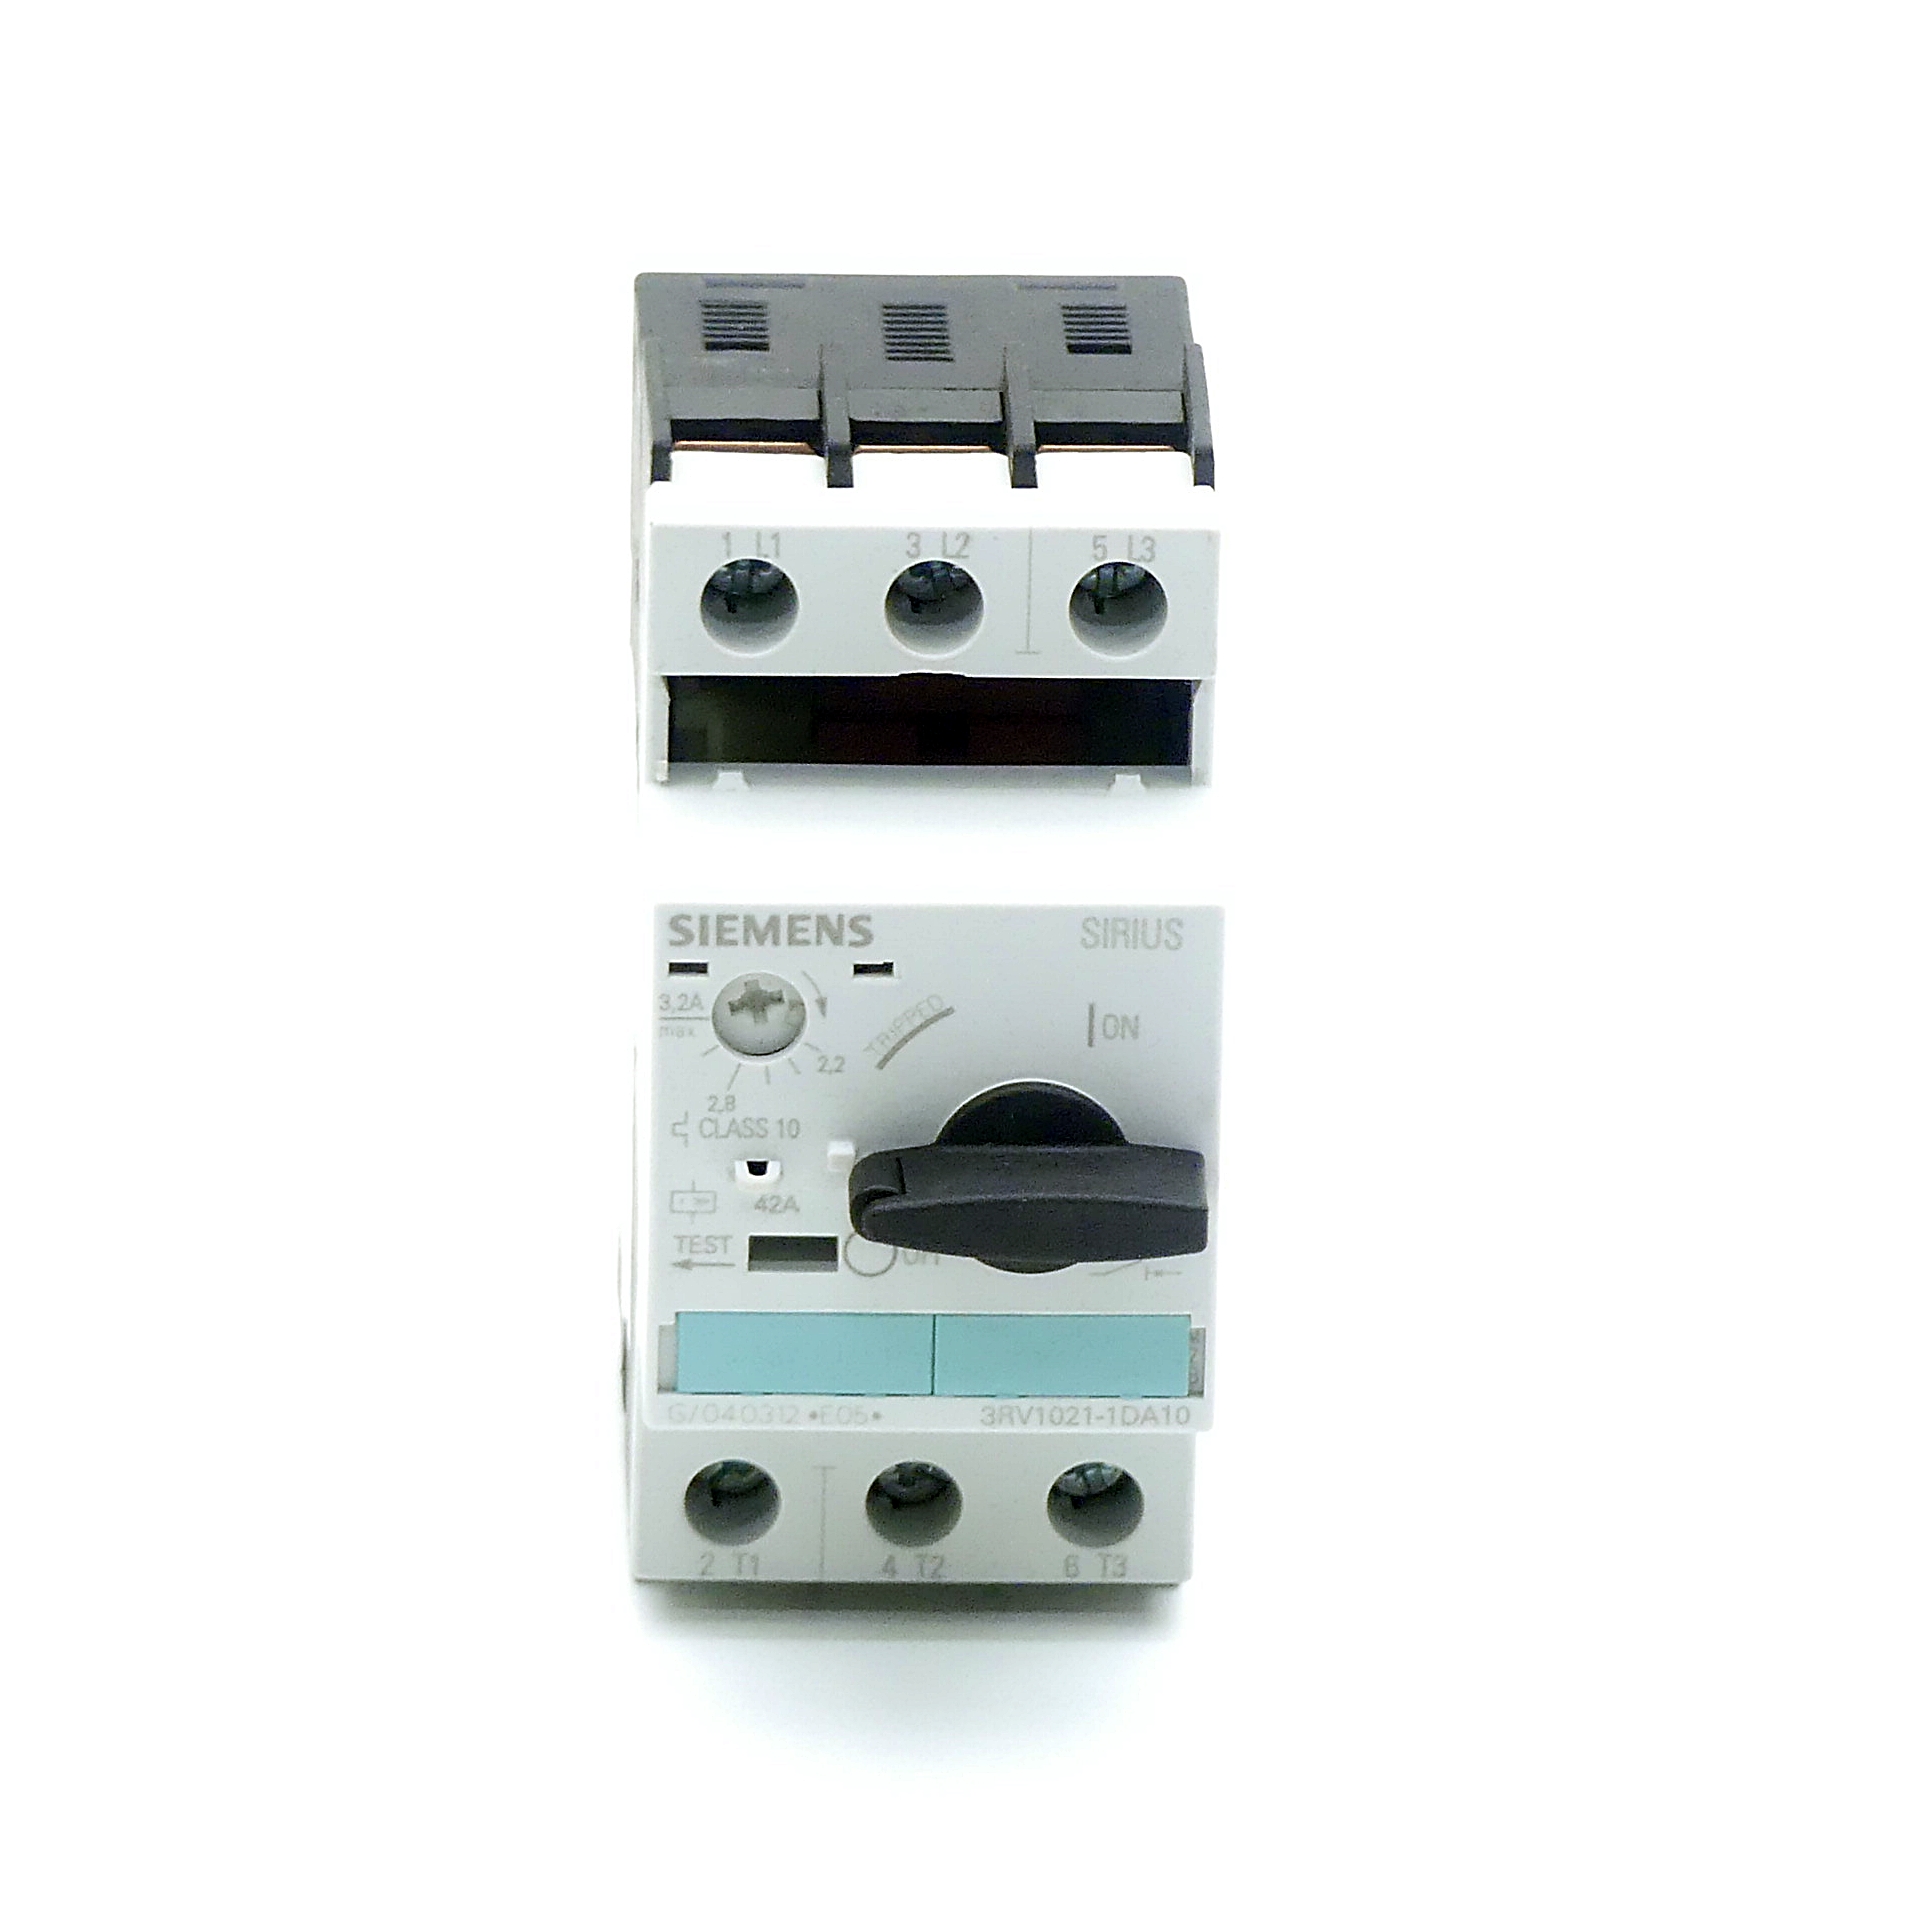 Circuit Breaker 3RV1021-1DA10 